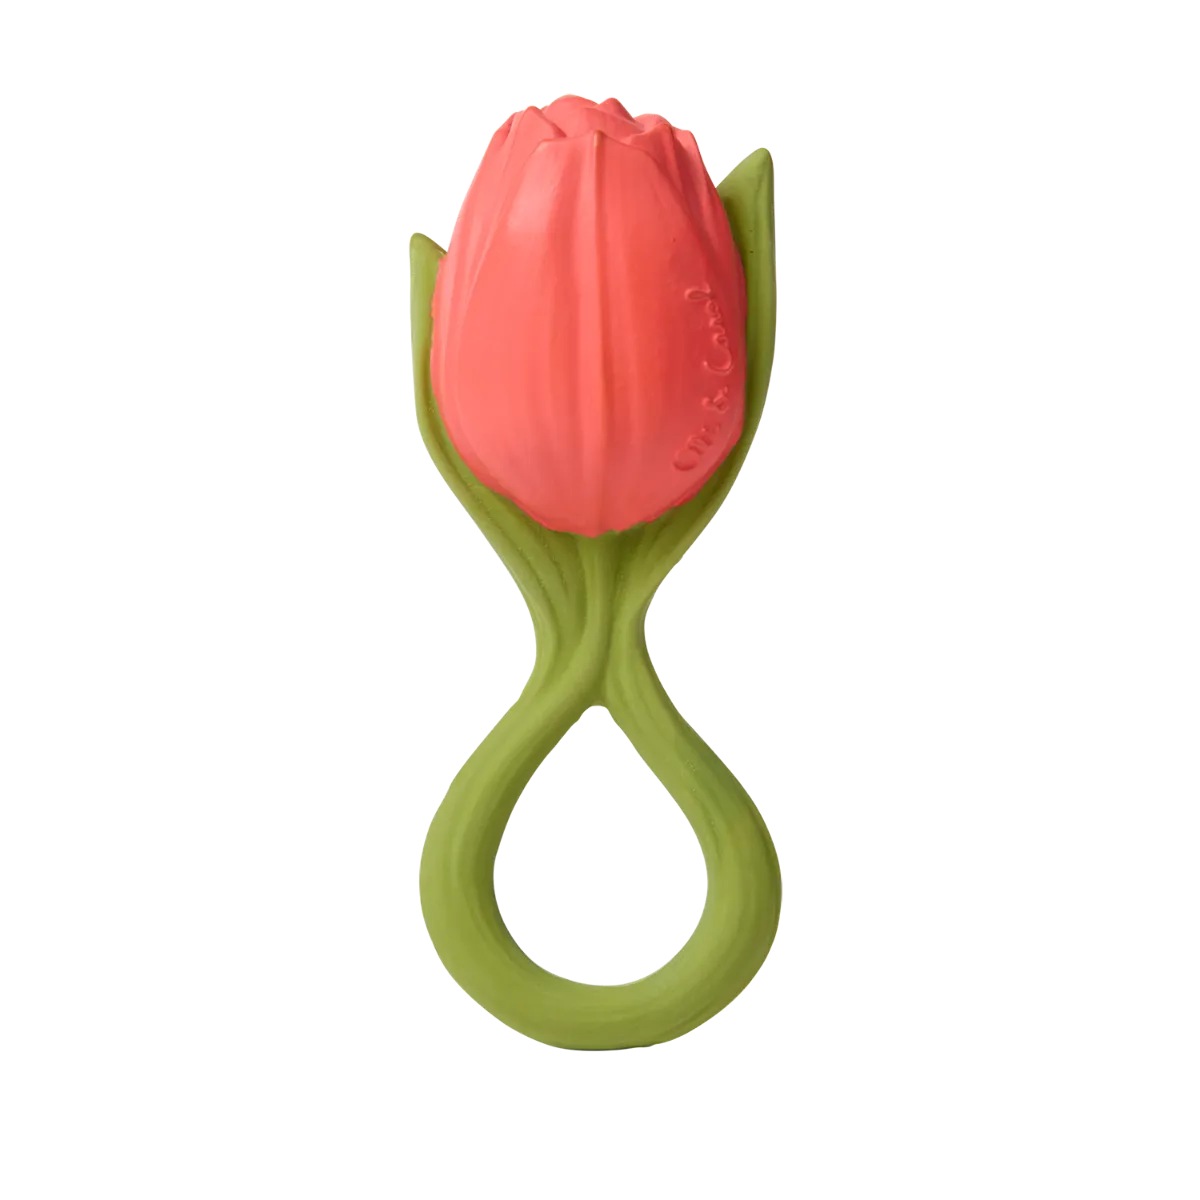 OLI&CAROL hryzatko tulipán Theo the Tulip 1×1 ks, hryzatko